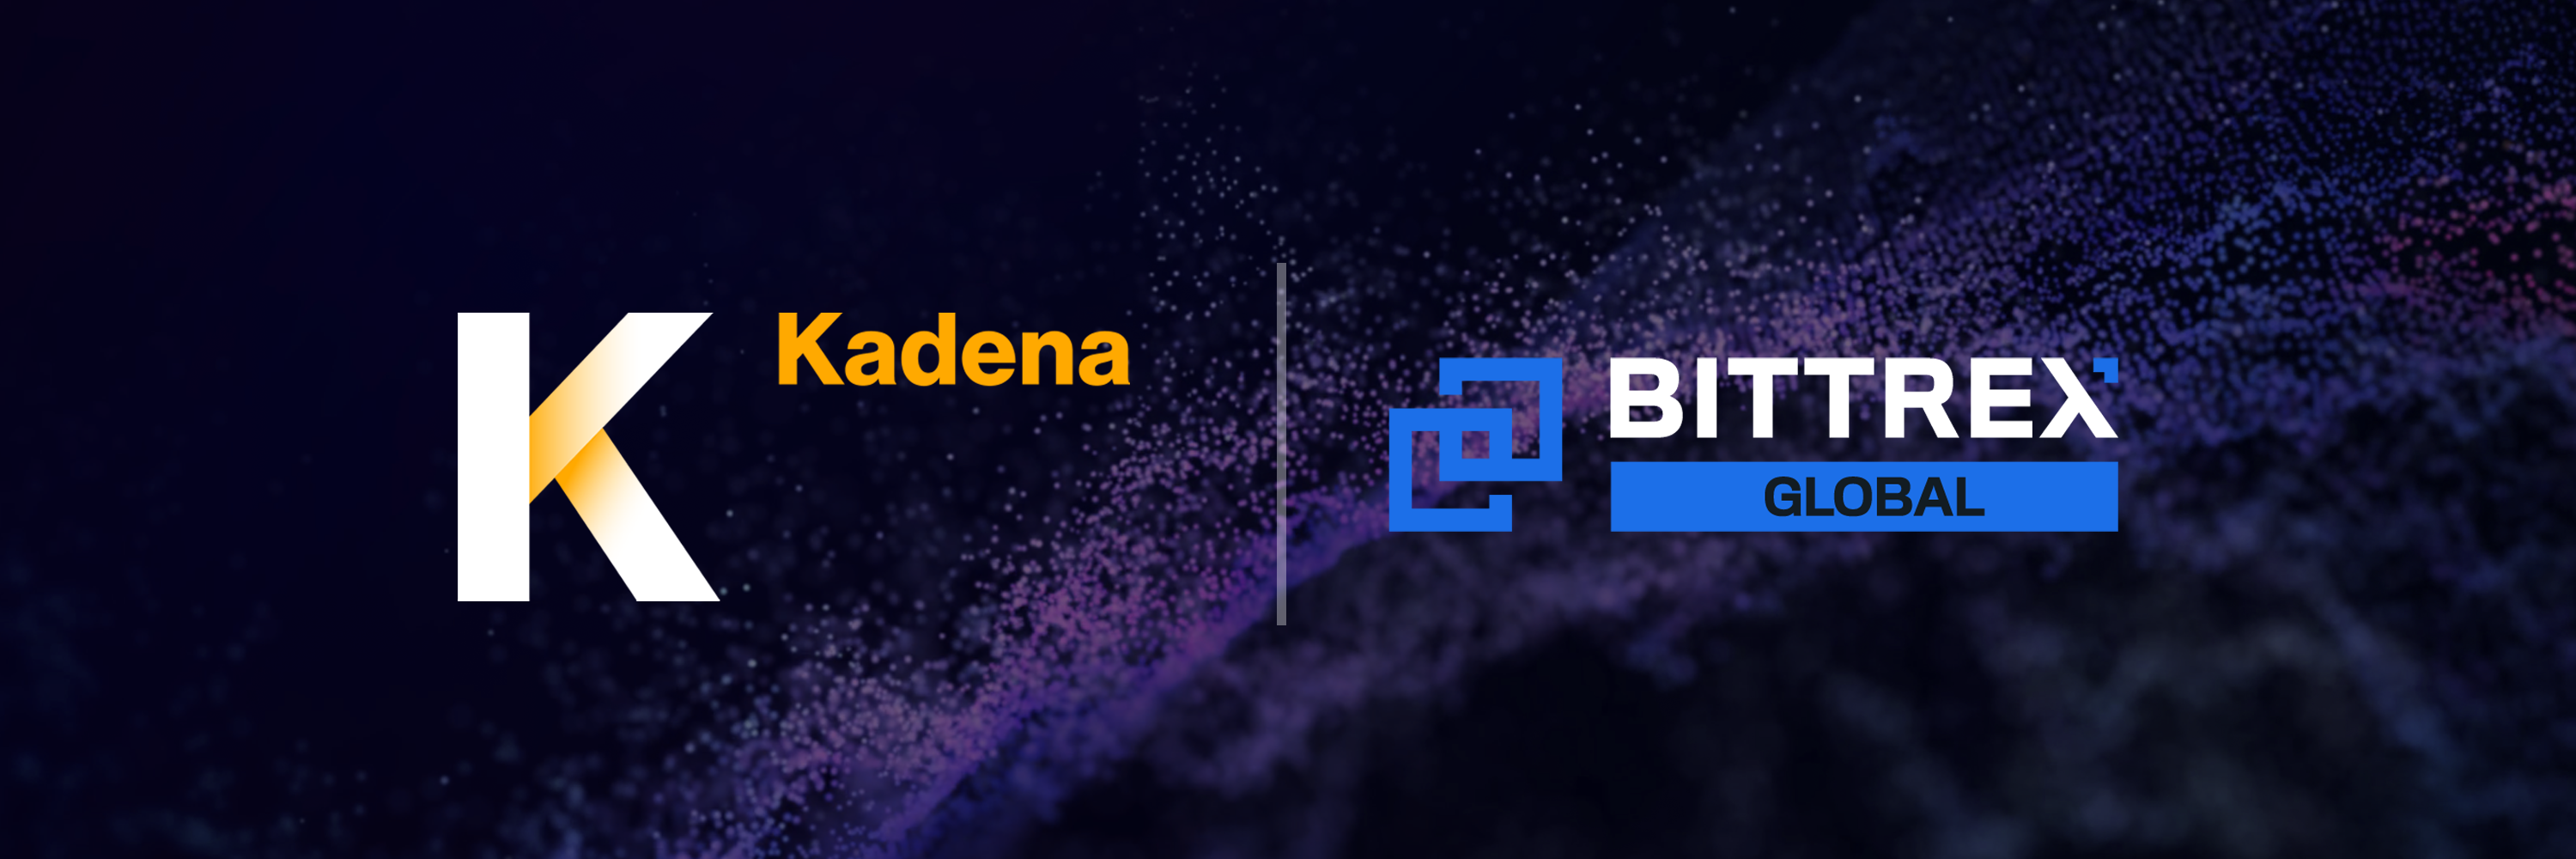 Kadena’s KDA Token Has First Listing on Bittrex Global, a ...